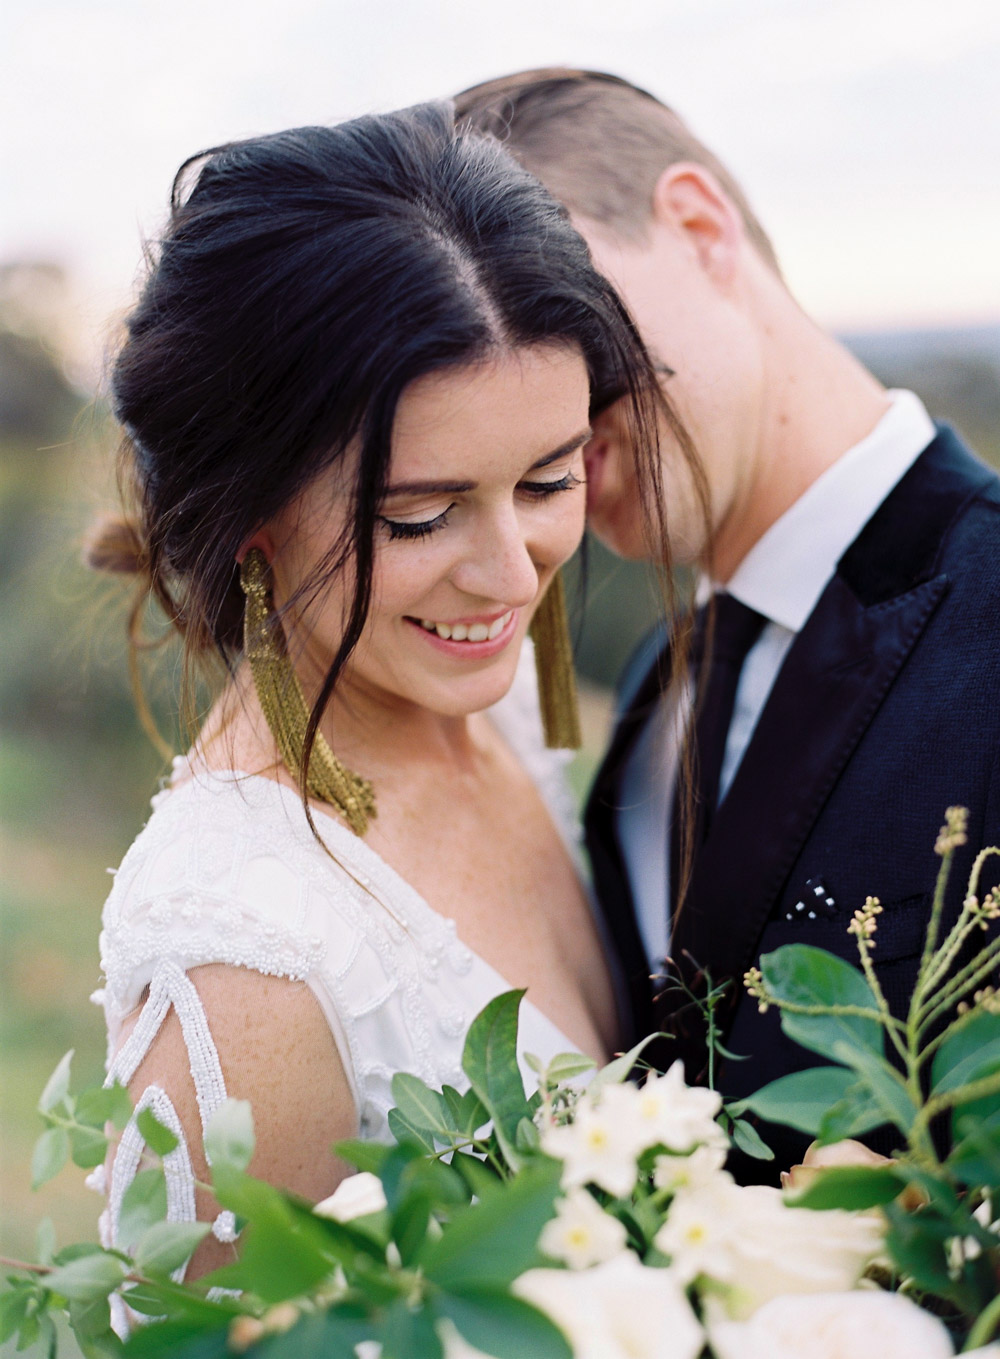 Perth Hills Post Wedding Shoot — katie grant photography